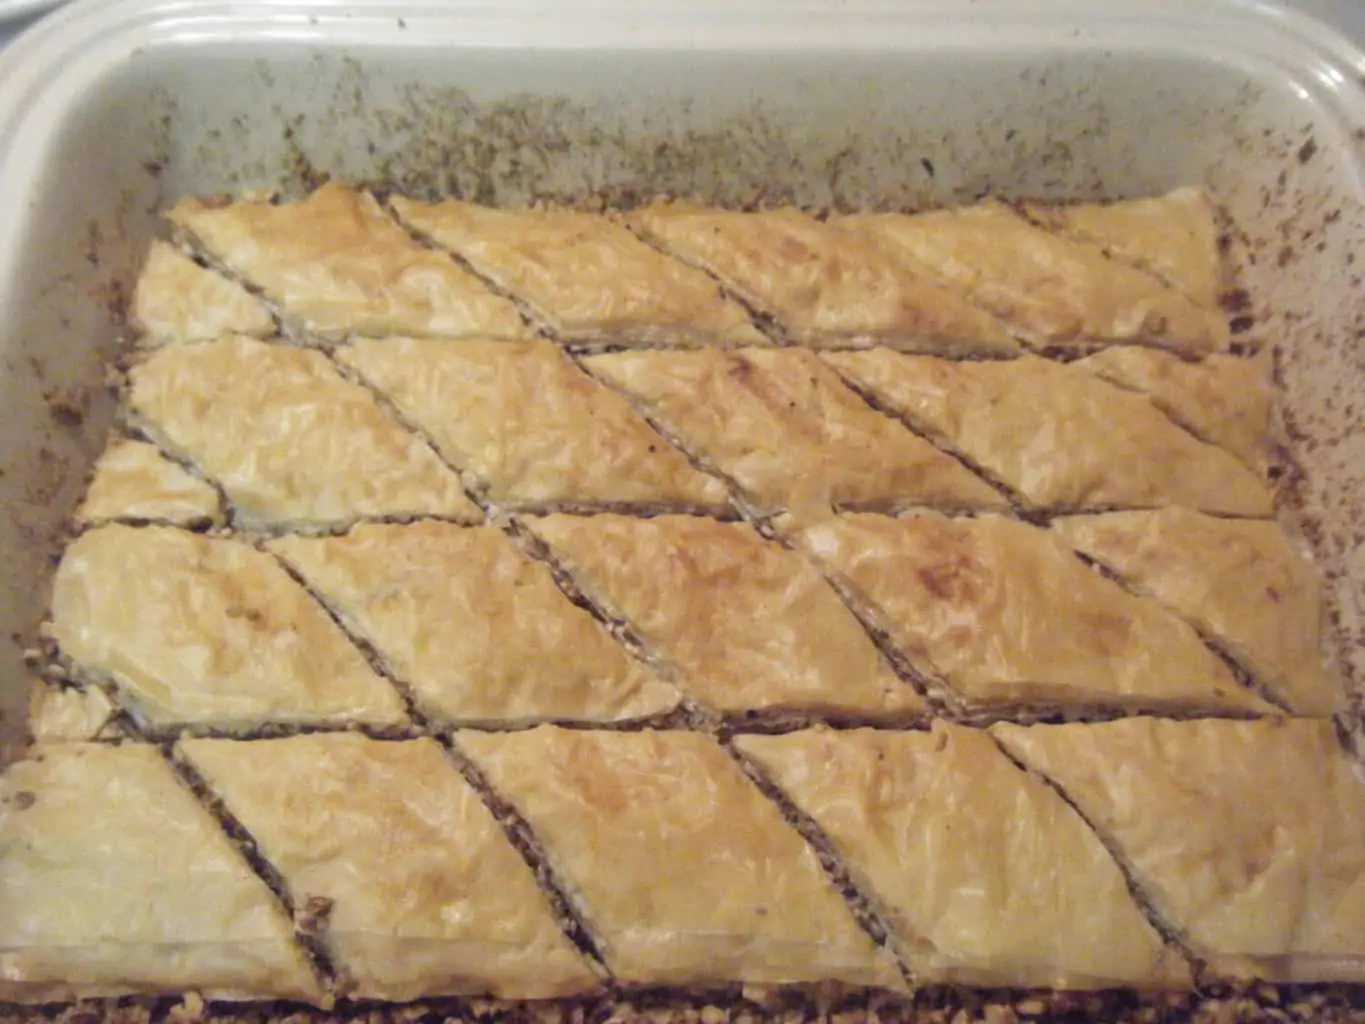 homemade Baklava baked to a golden brown